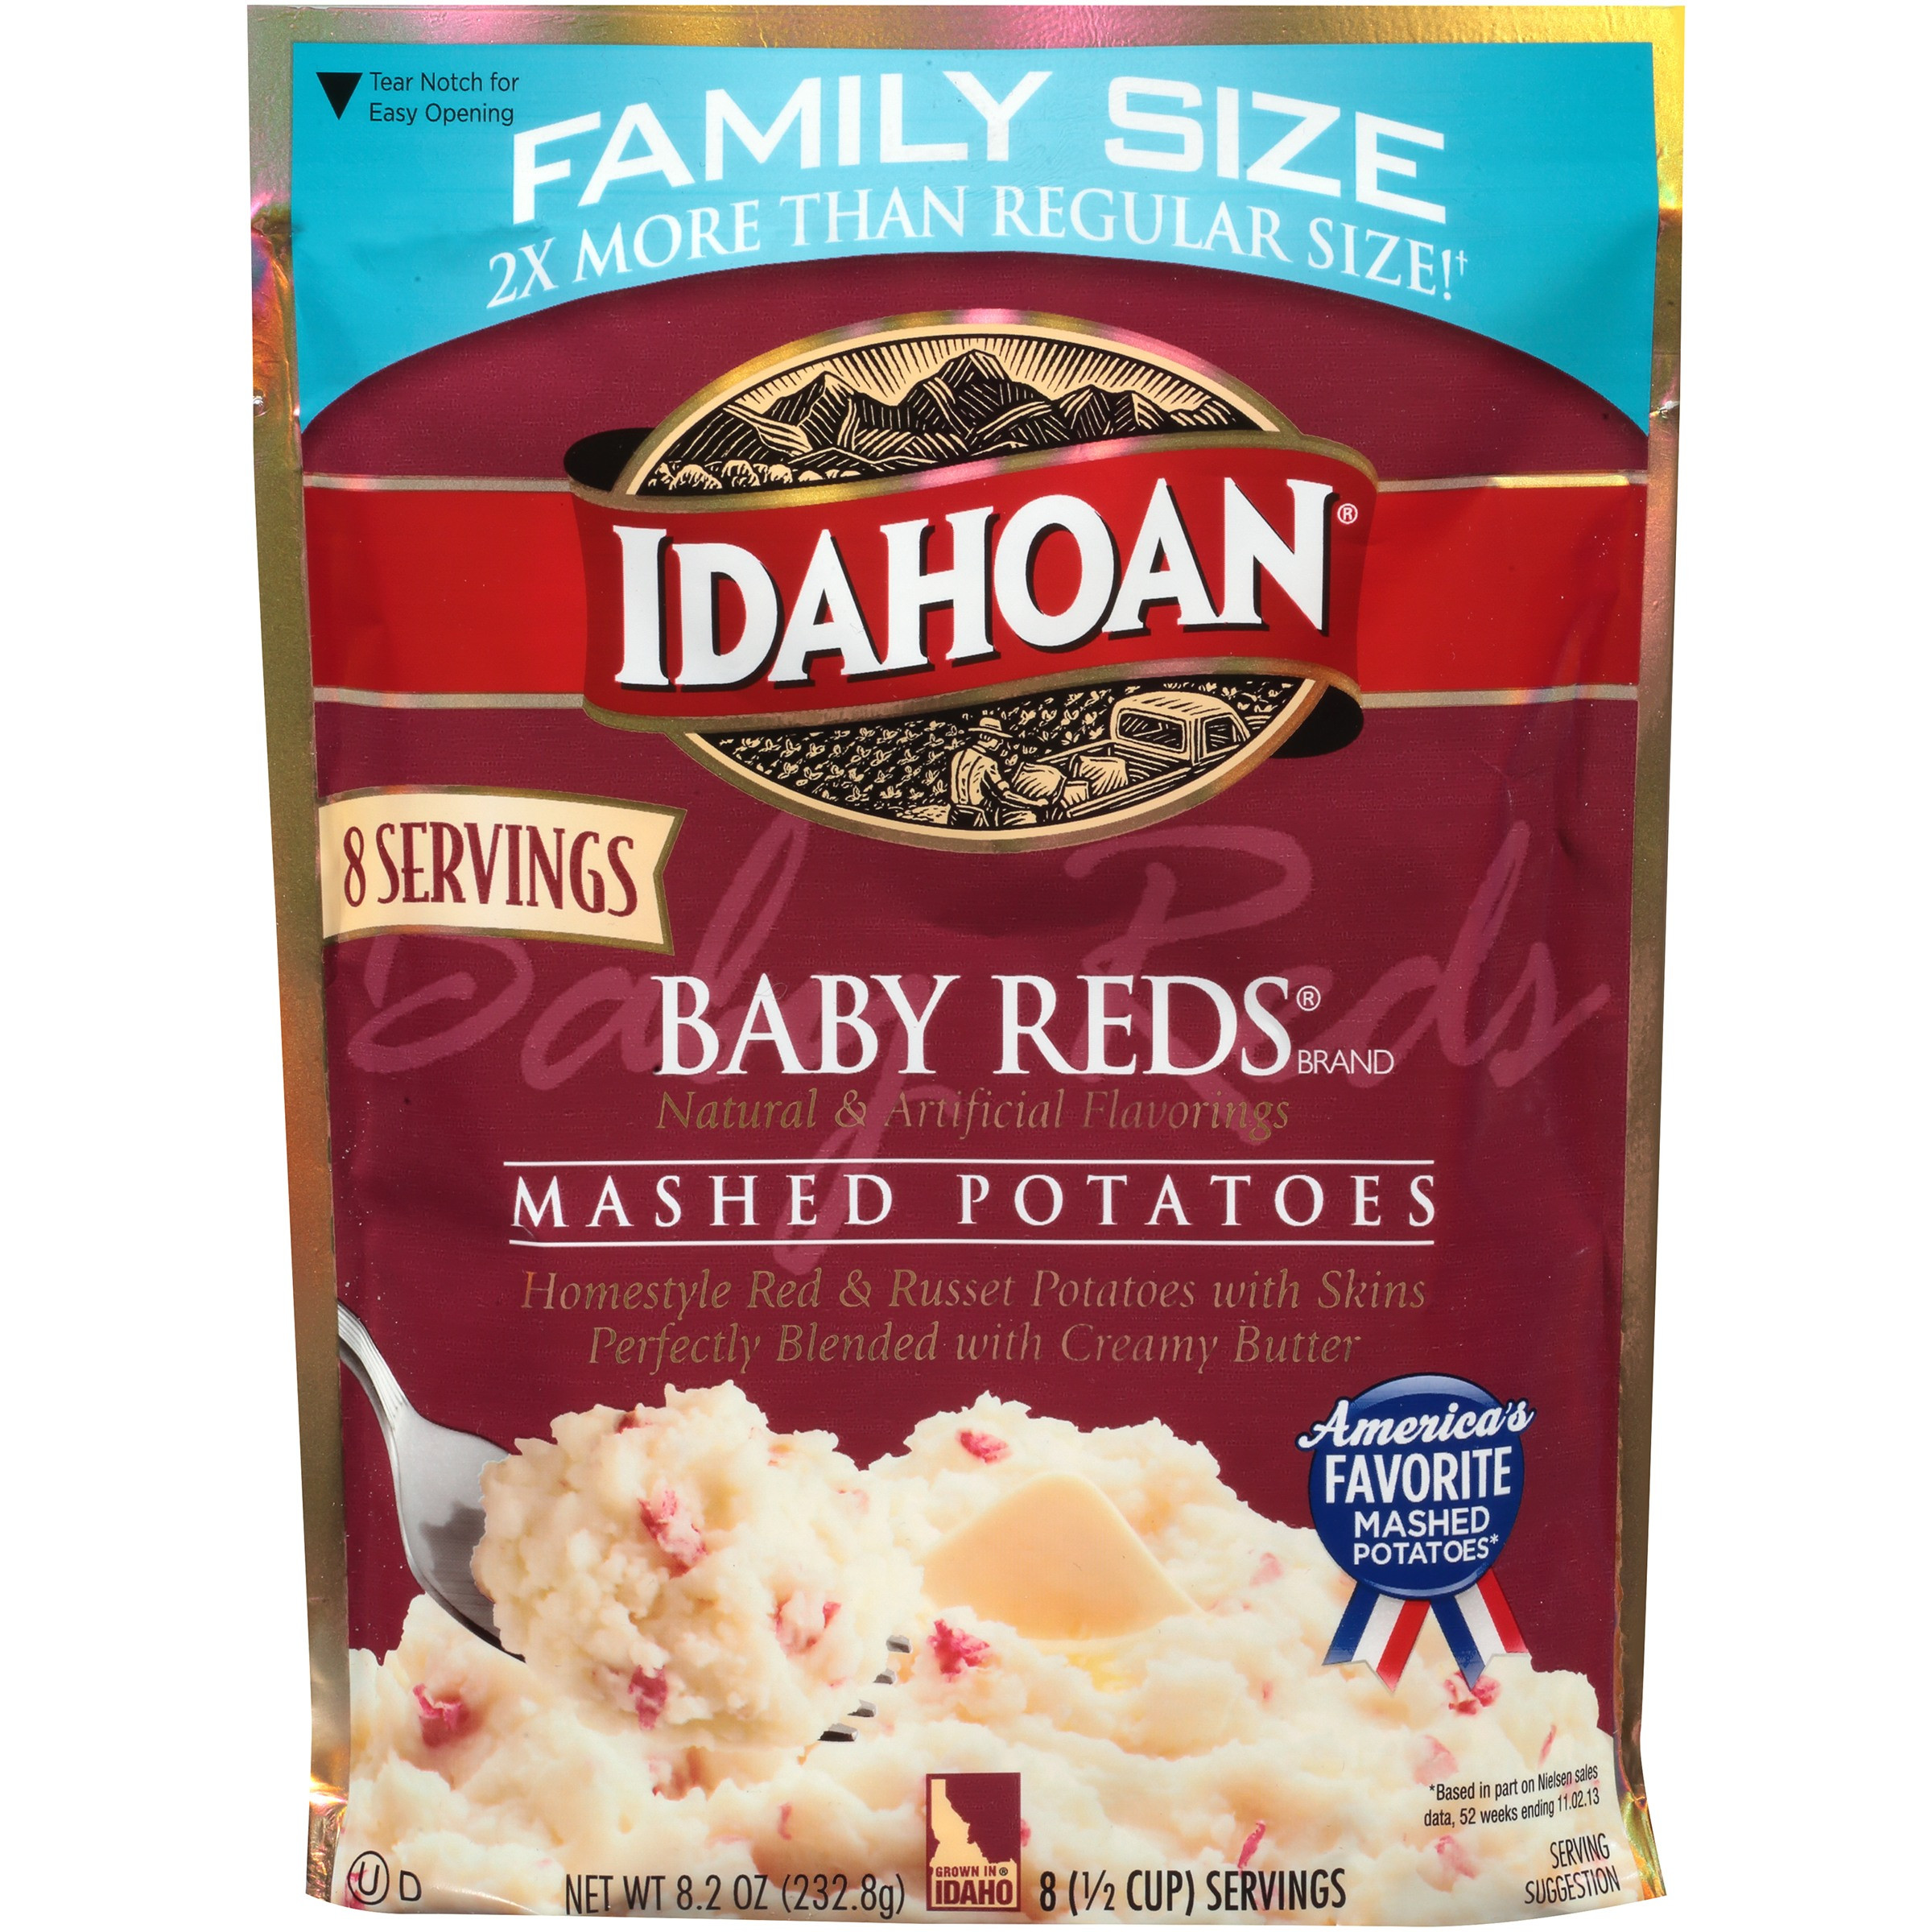 Are Mashed Potatoes Gluten Free
 Idahoan Family Size Baby Reds Mashed Potatoes Gluten